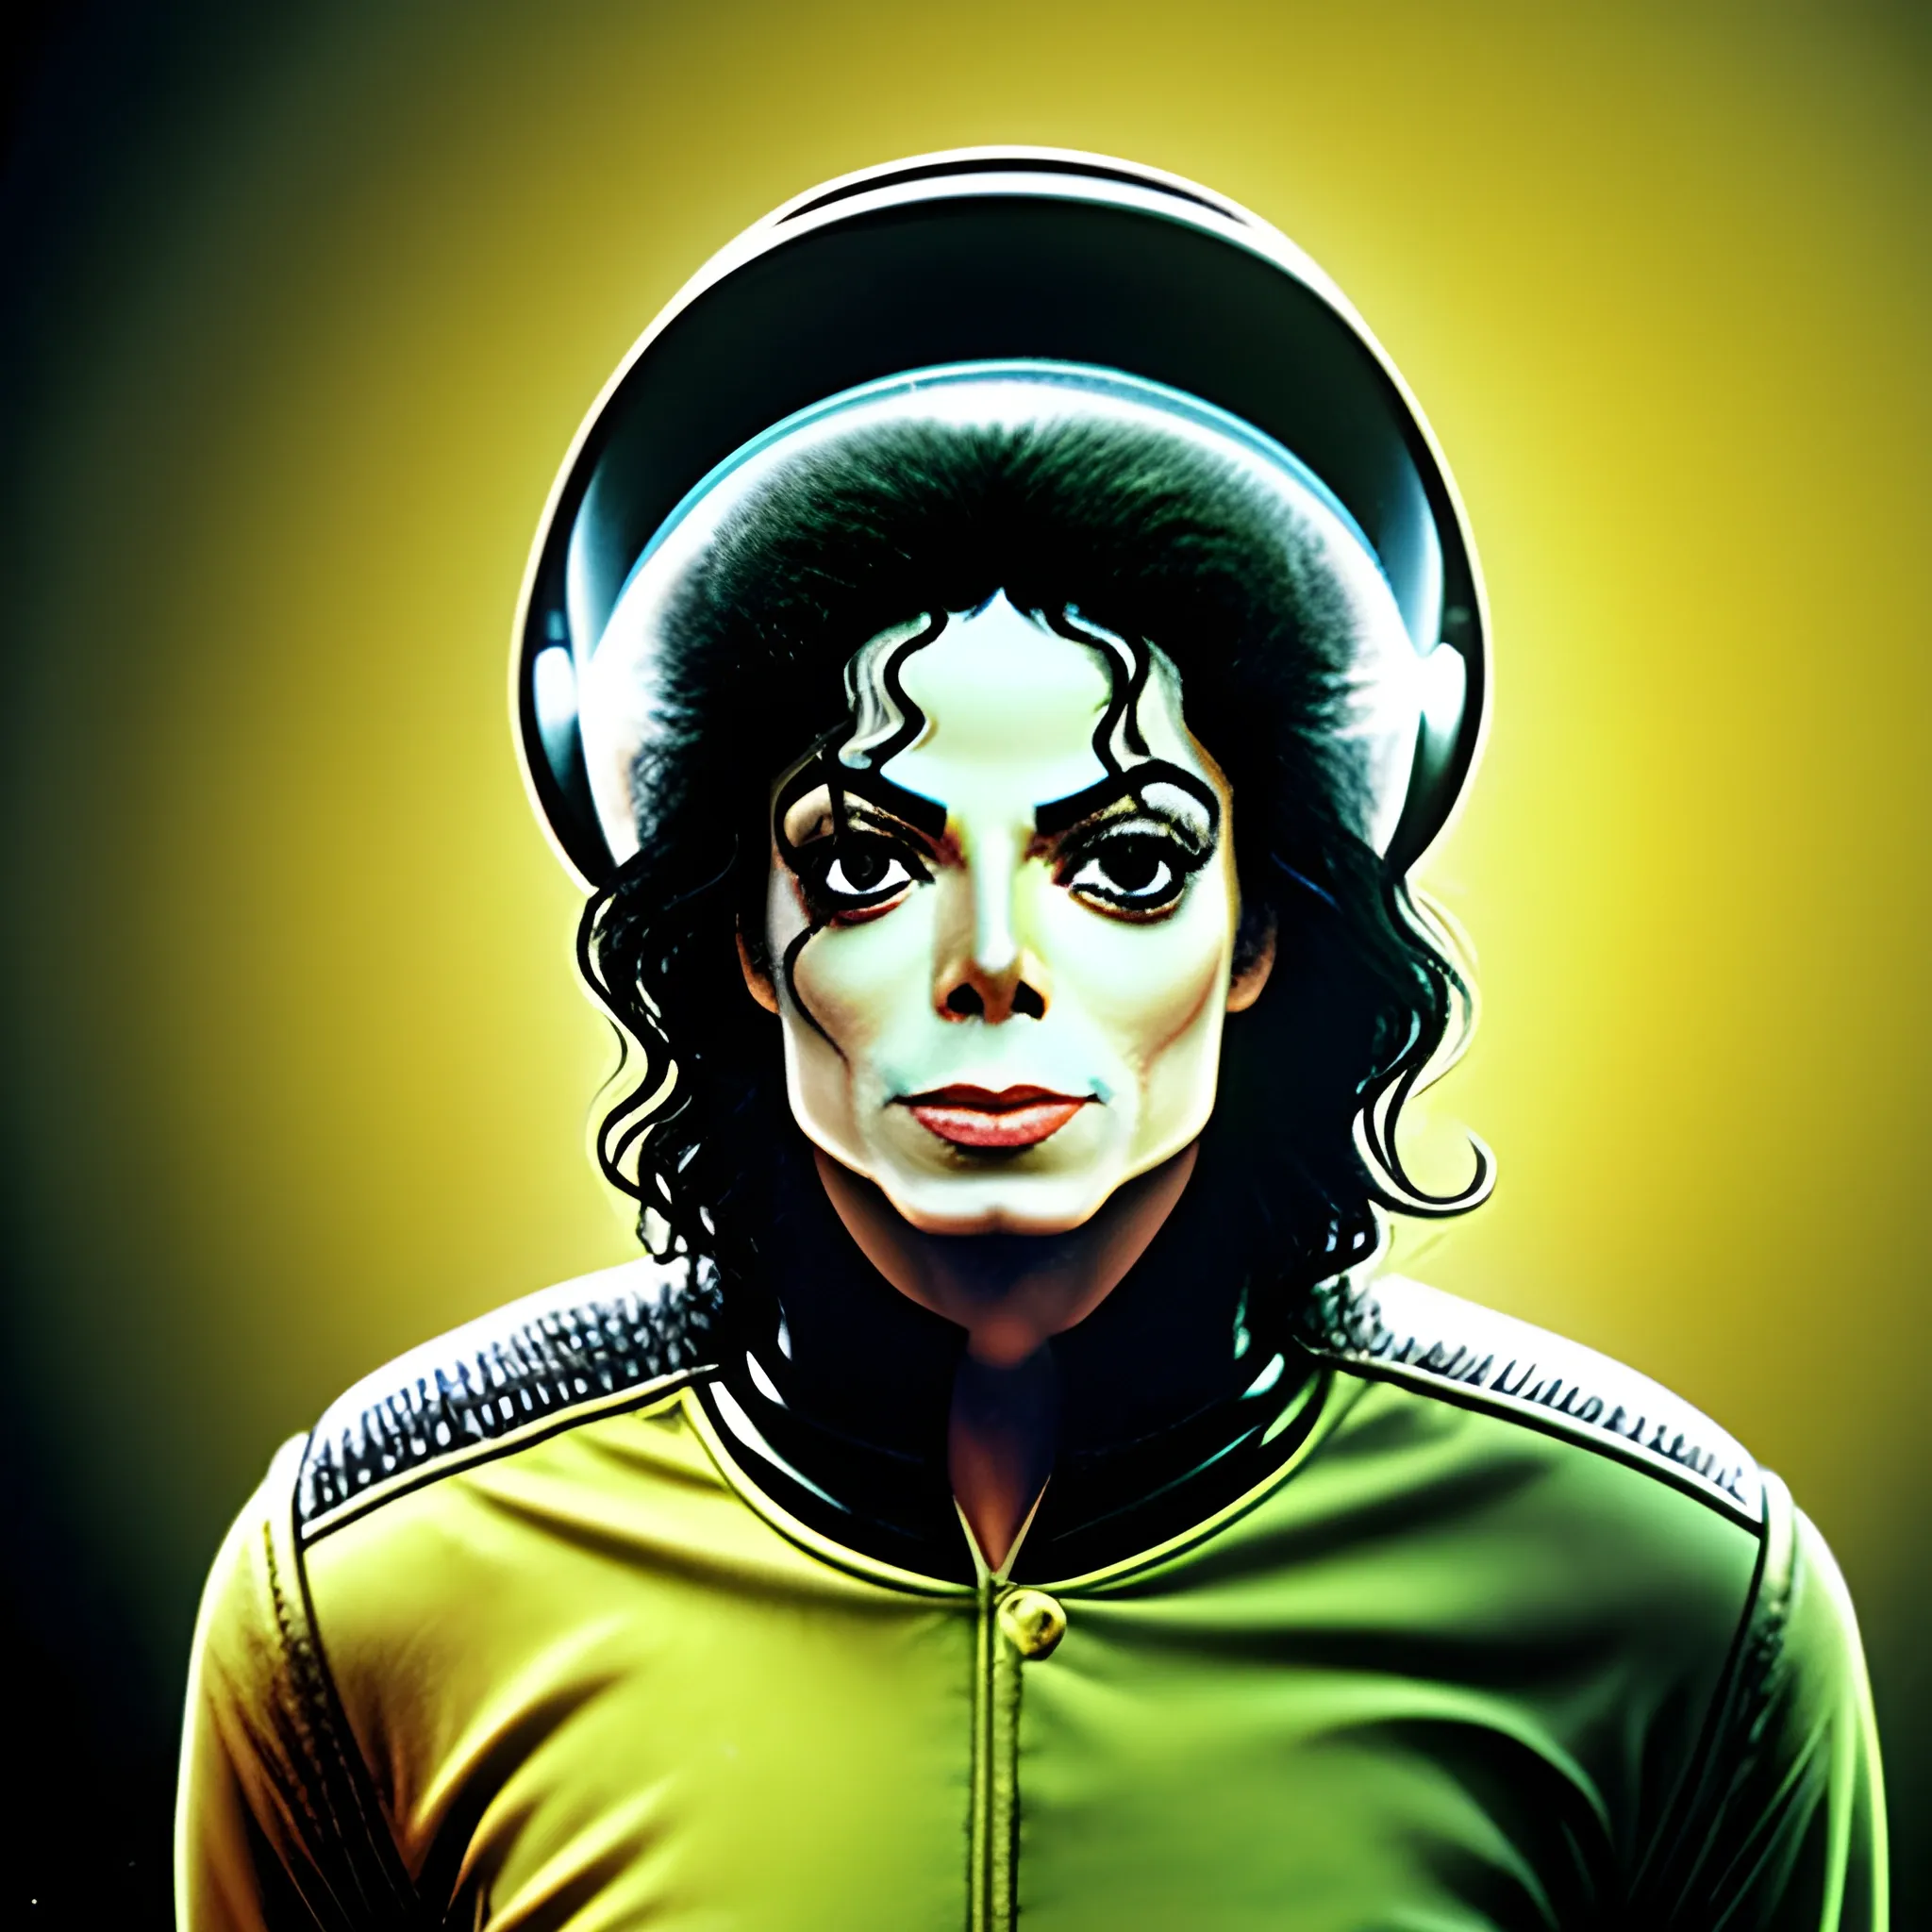 Michael Jackson as Alien